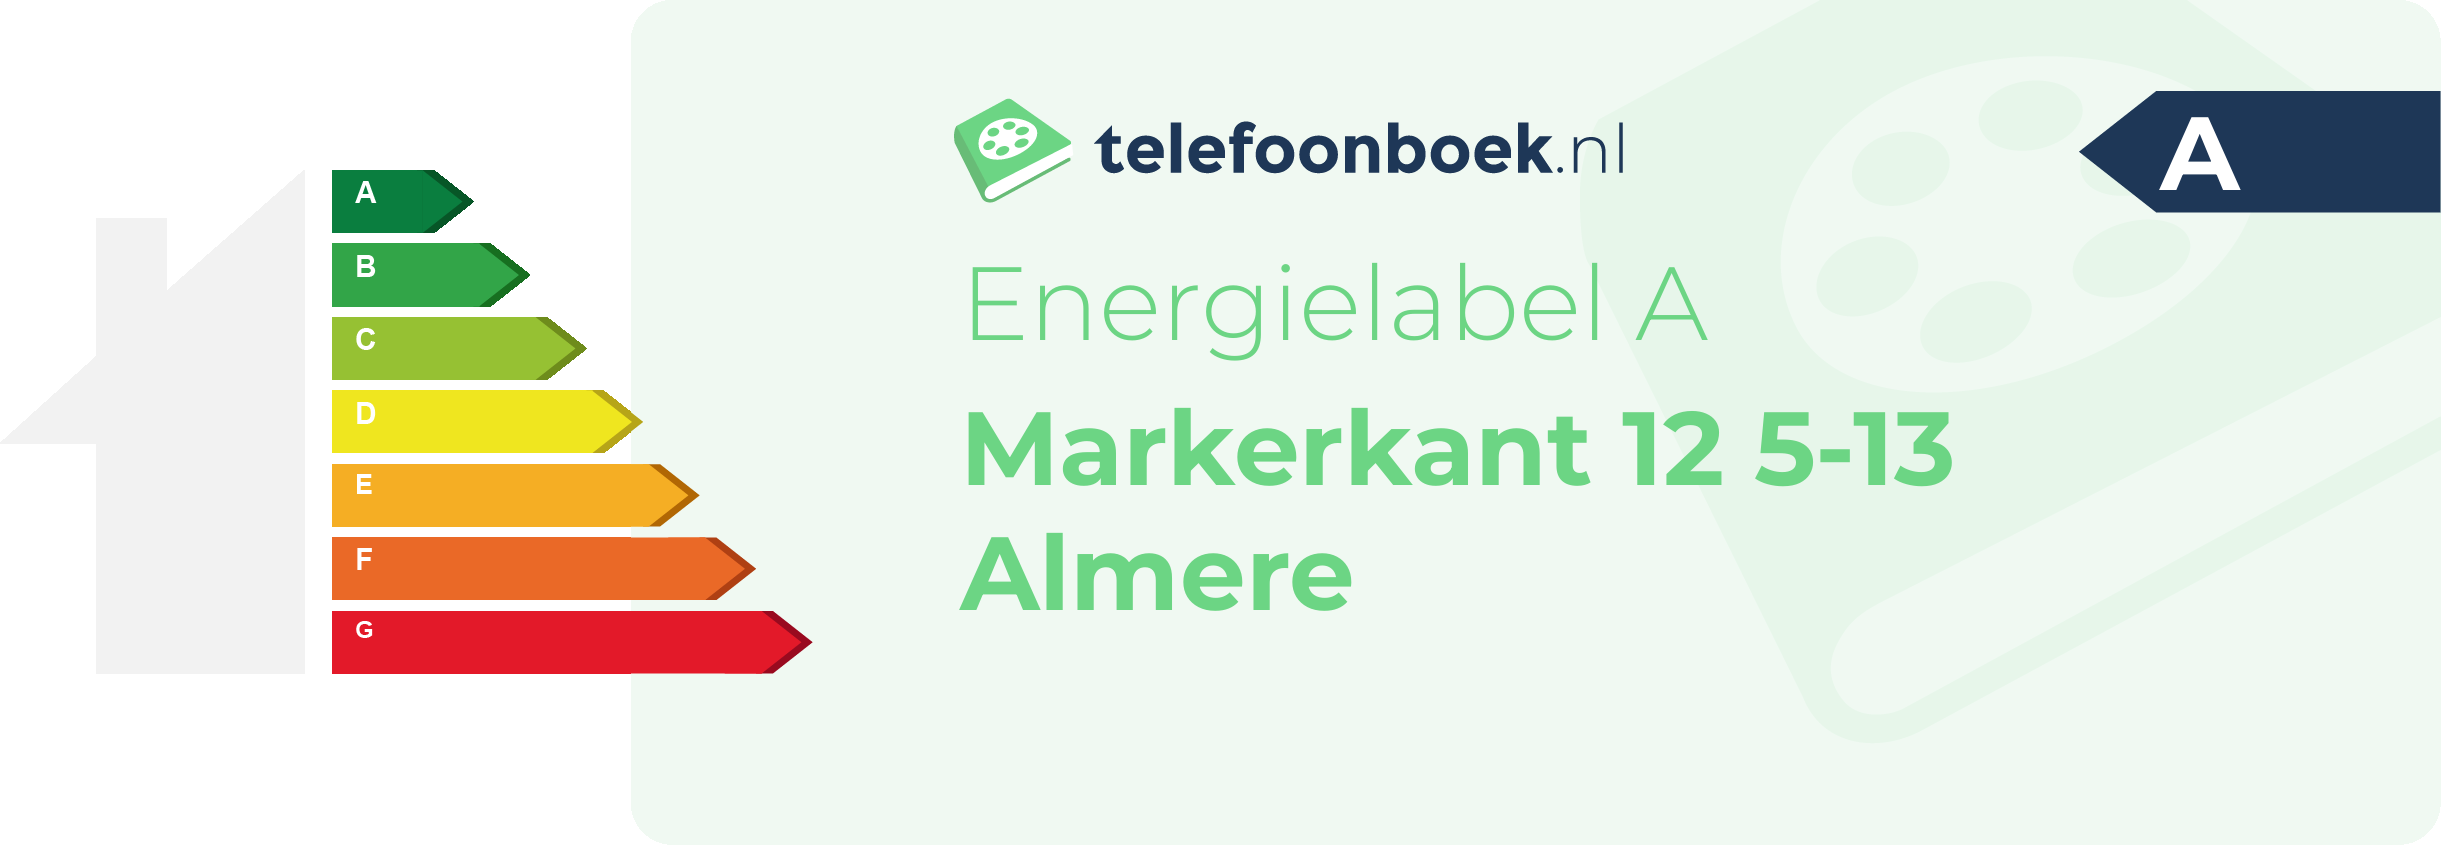 Energielabel Markerkant 12 5-13 Almere